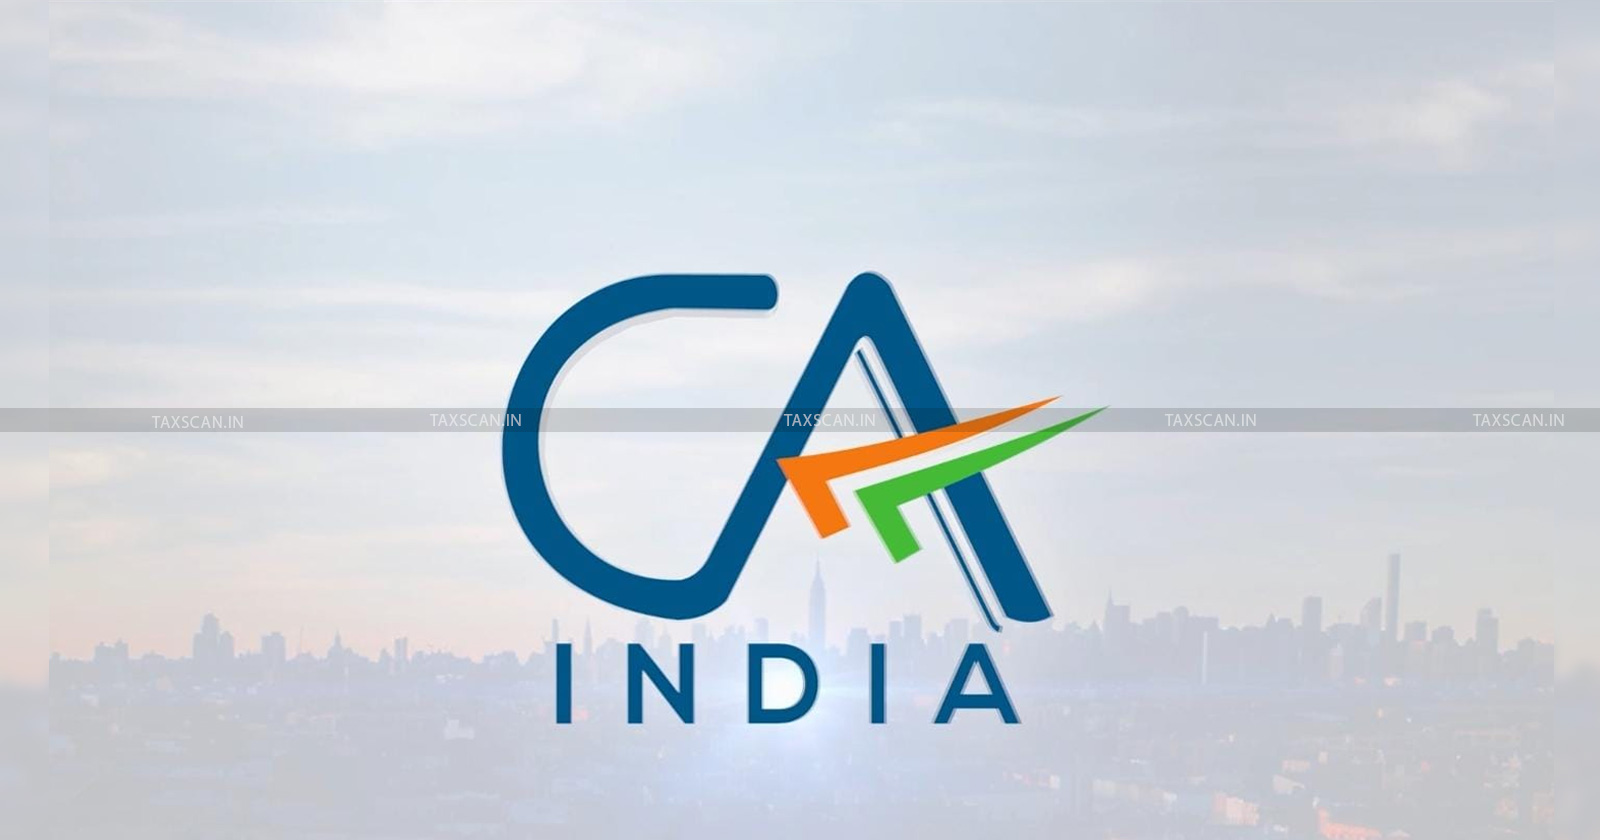 ICAI unveils new CA Logo at GloPAC